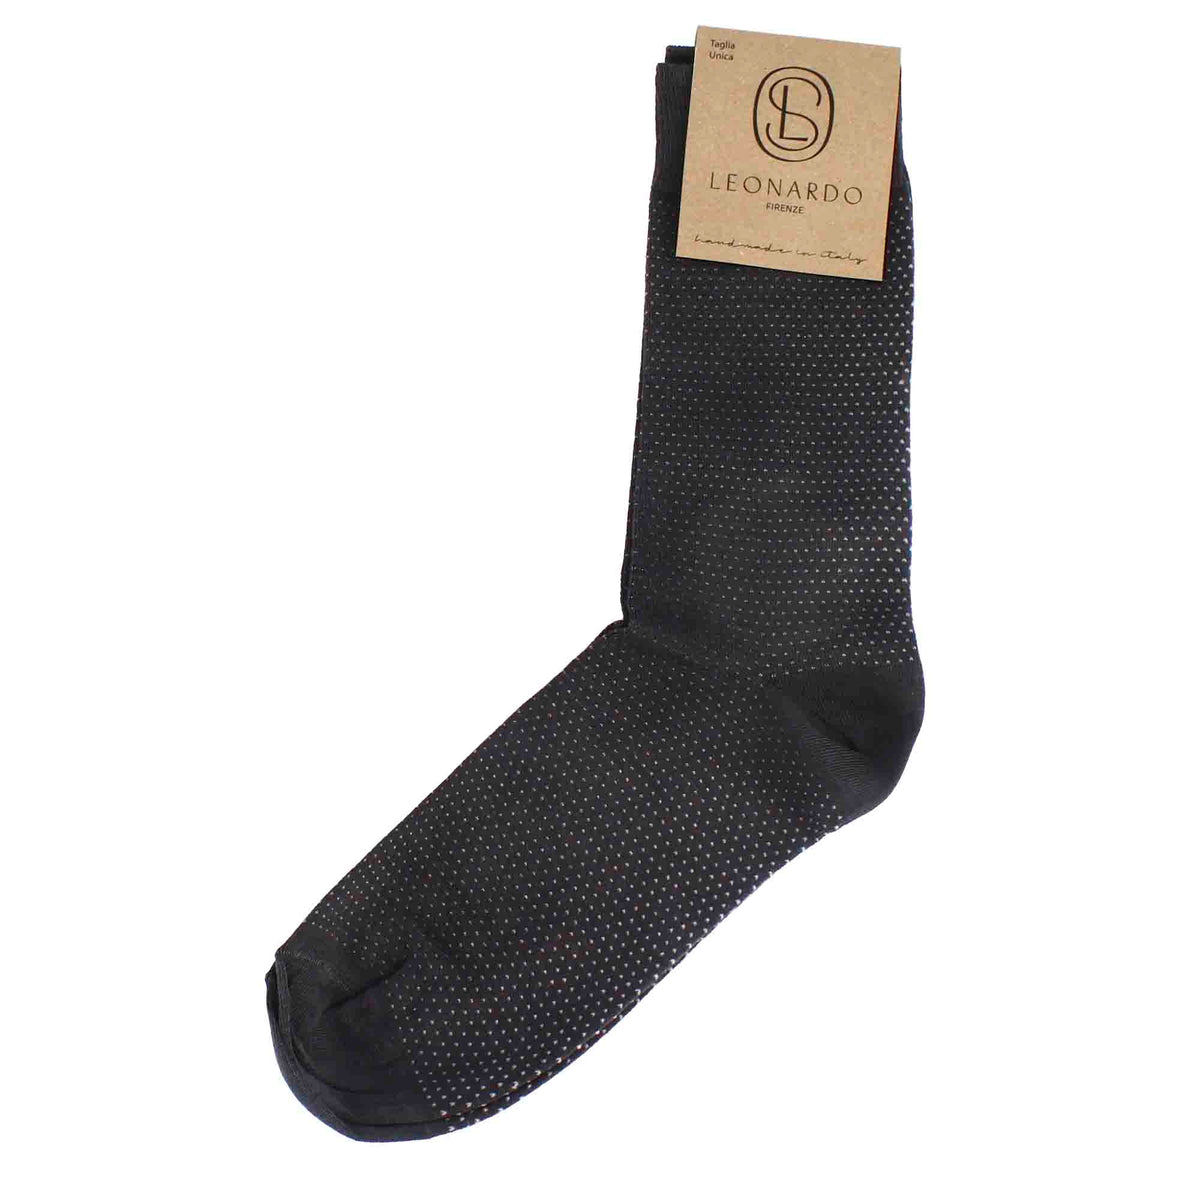 Men's grey cotton socks with white polka dots